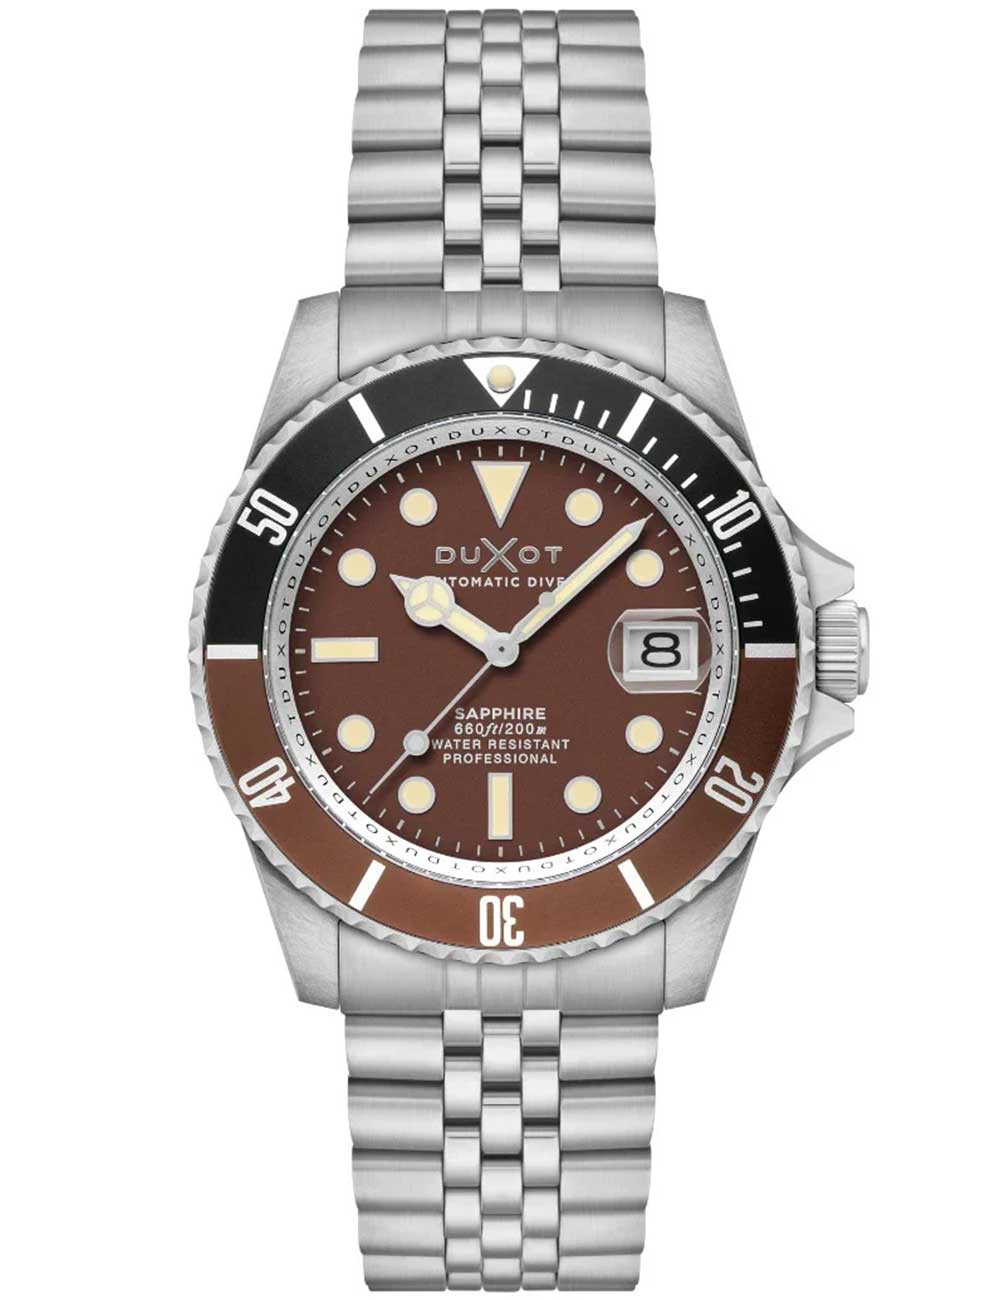 Pánské hodinky Duxot DX-2057-99 Atlantica Diver